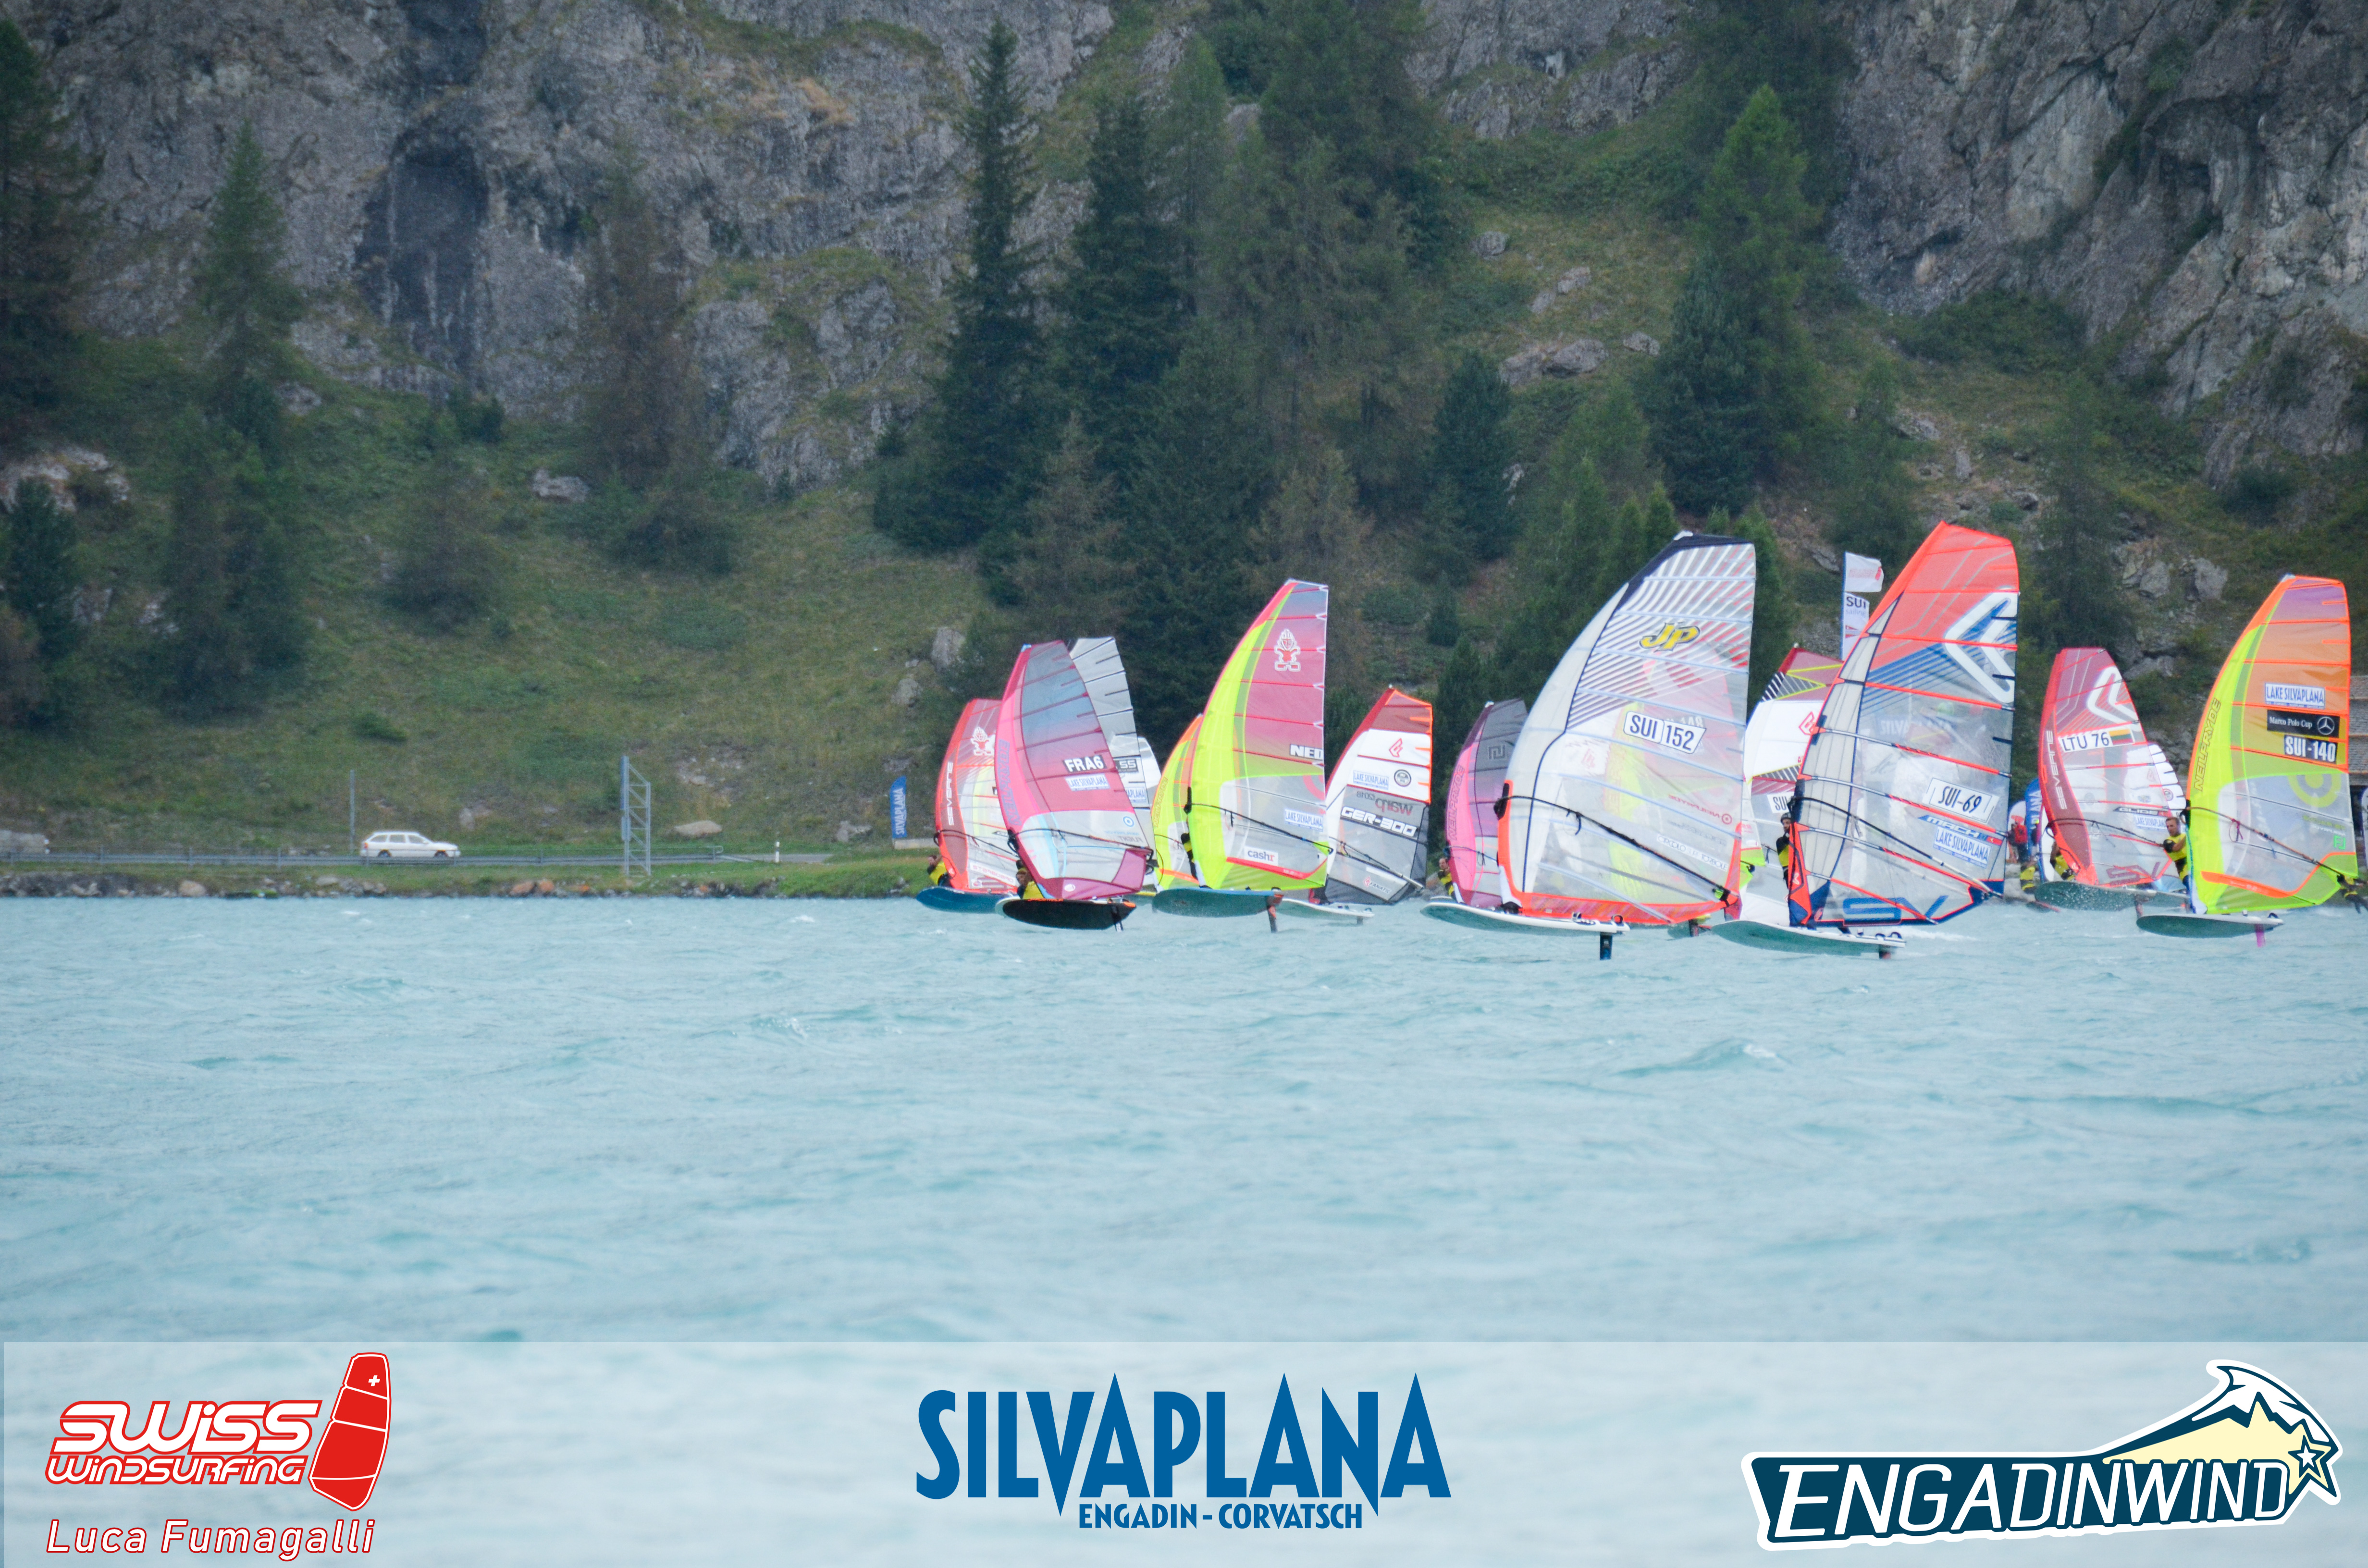  Windsurfing  Swiss Championship/Engadinwind  Silvaplana SUI  Day 2